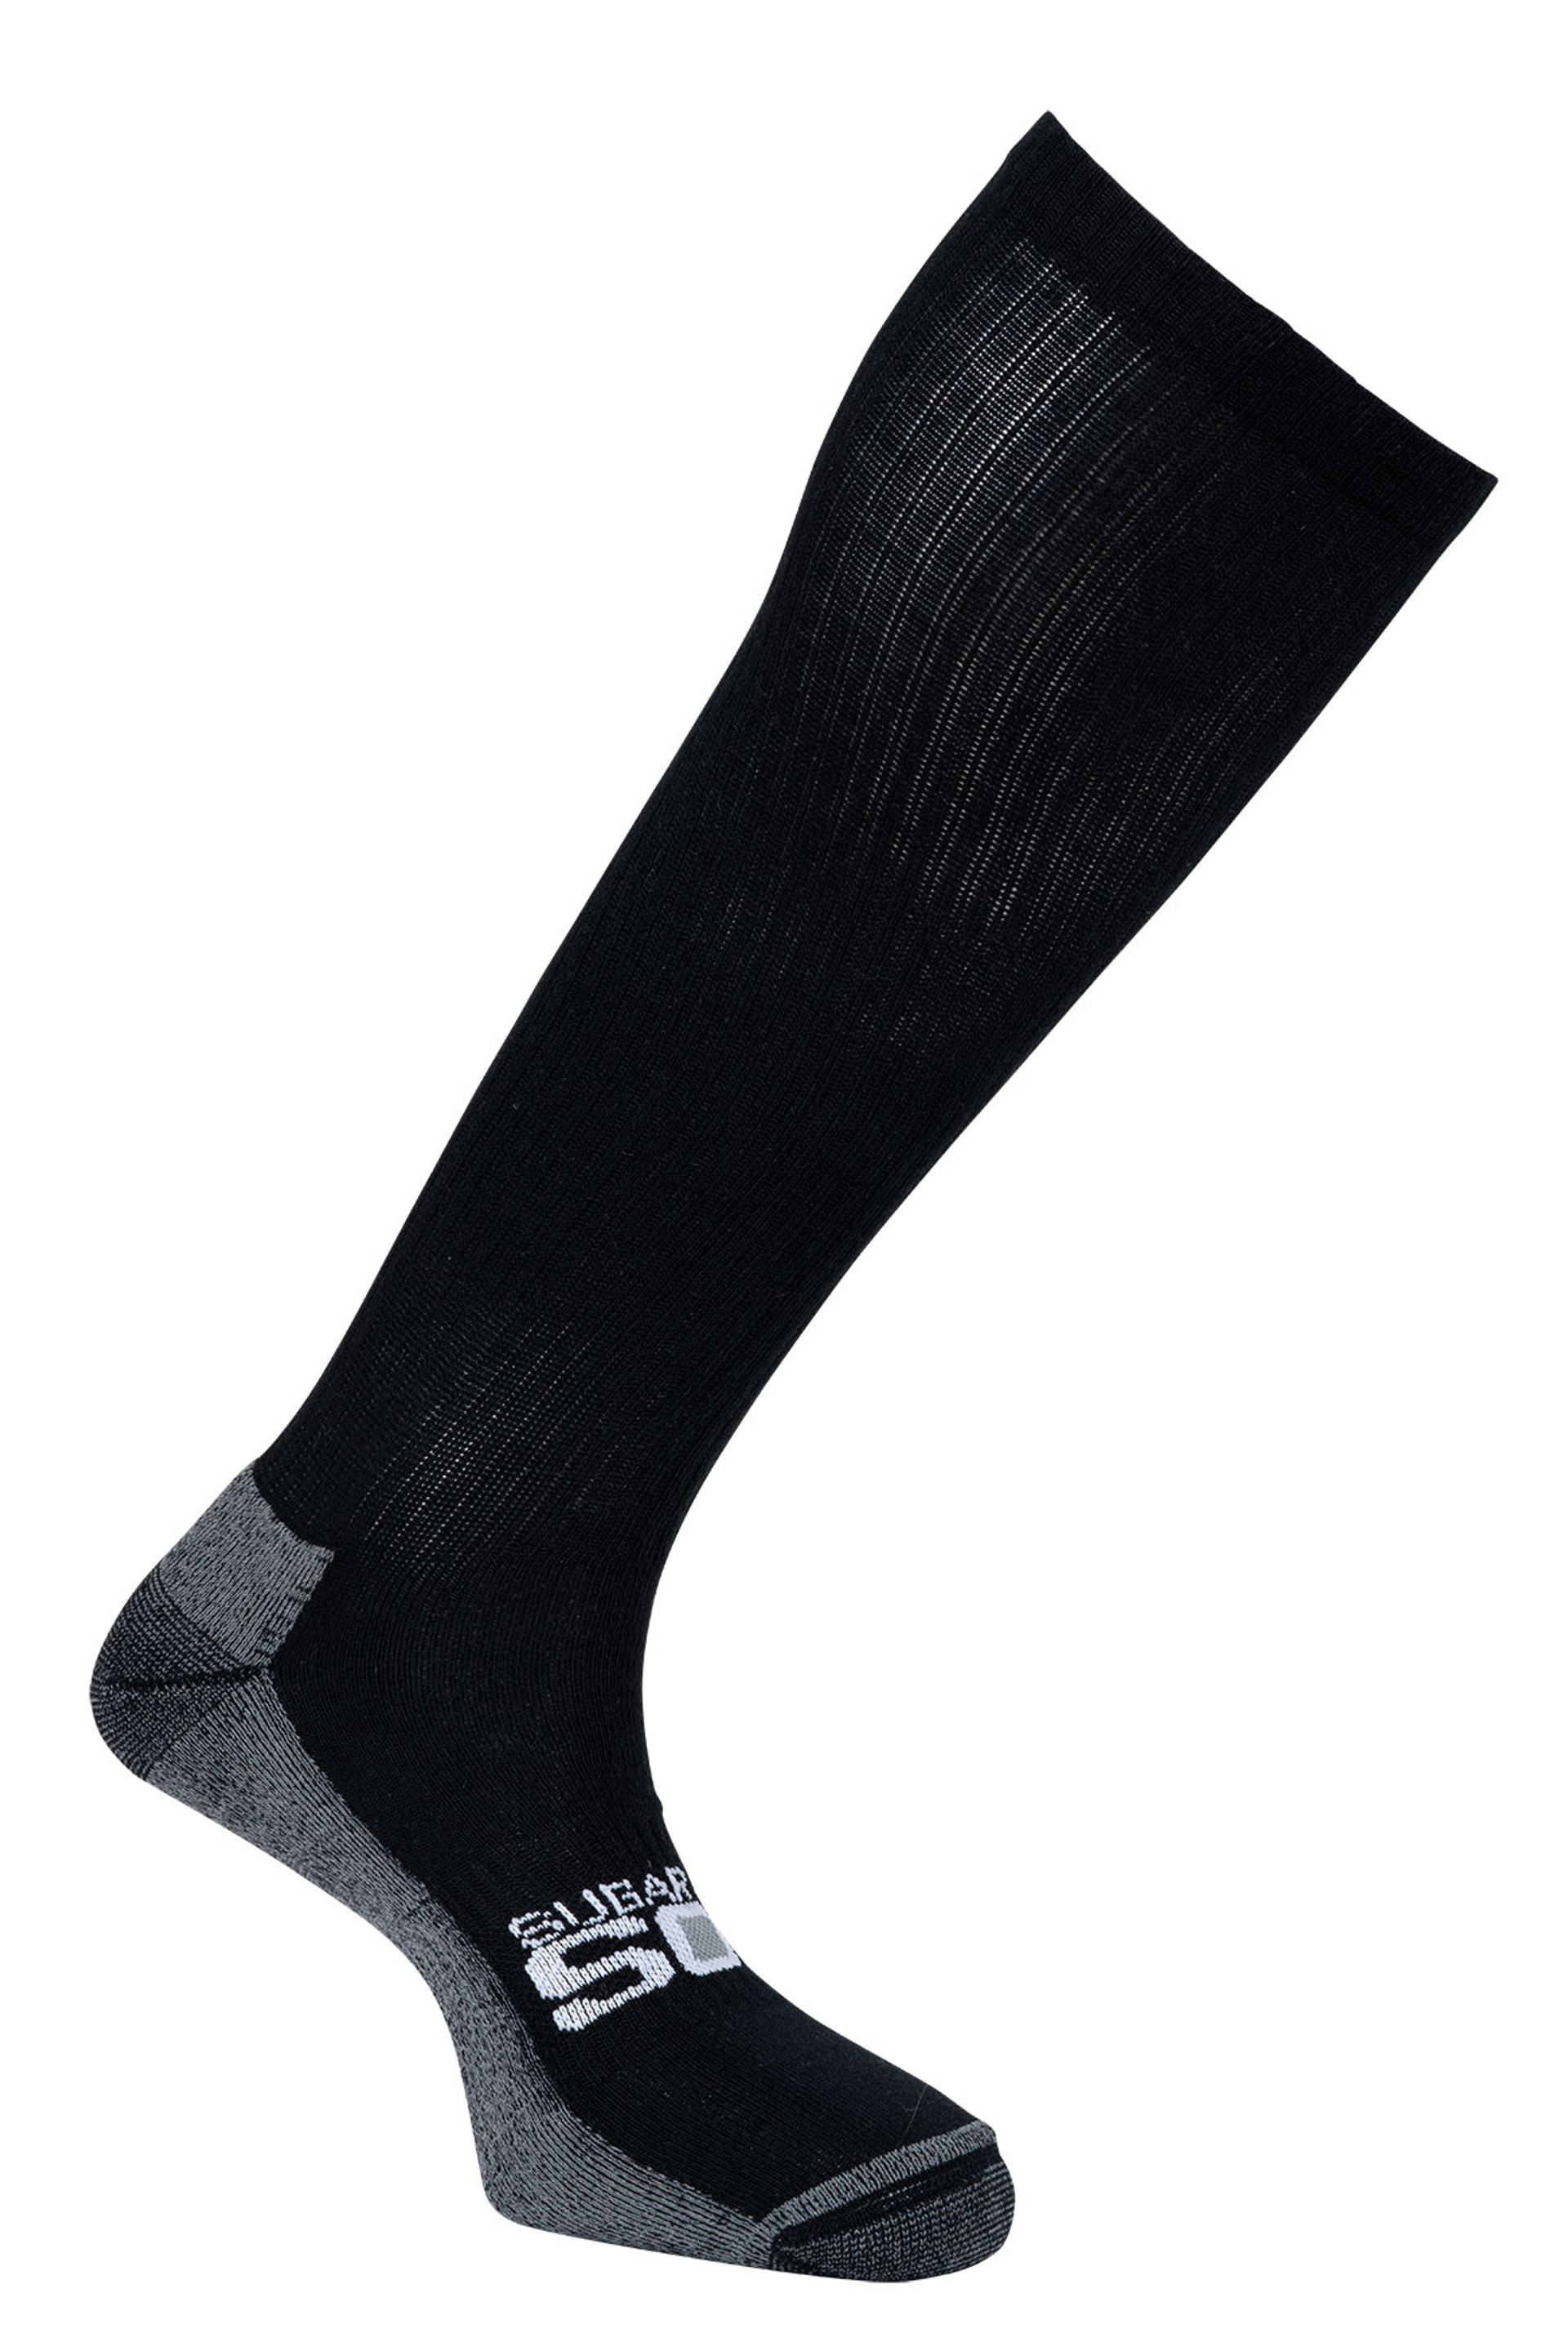 Mens Black & White Combo Pack Compression Socks | Sugar Free Sox